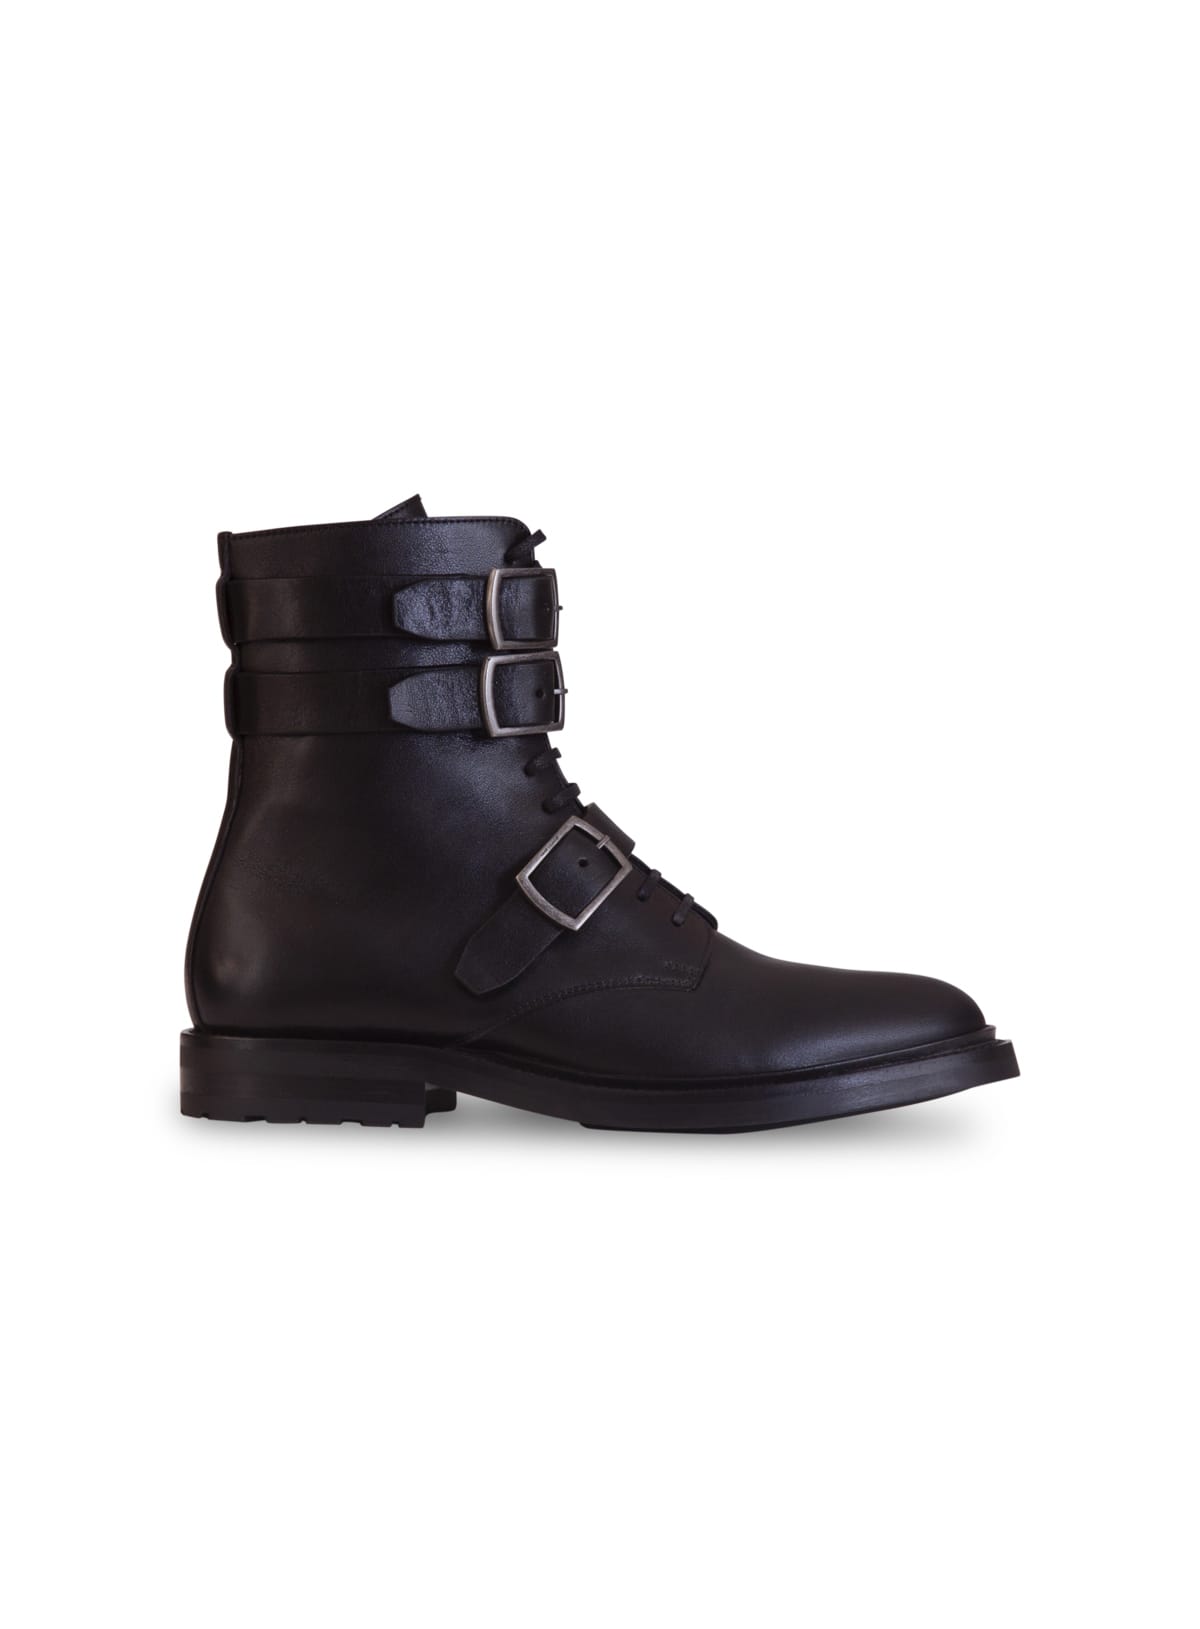 Buy Saint Laurent Army Ankle Boots online, shop Saint Laurent shoes with free shipping